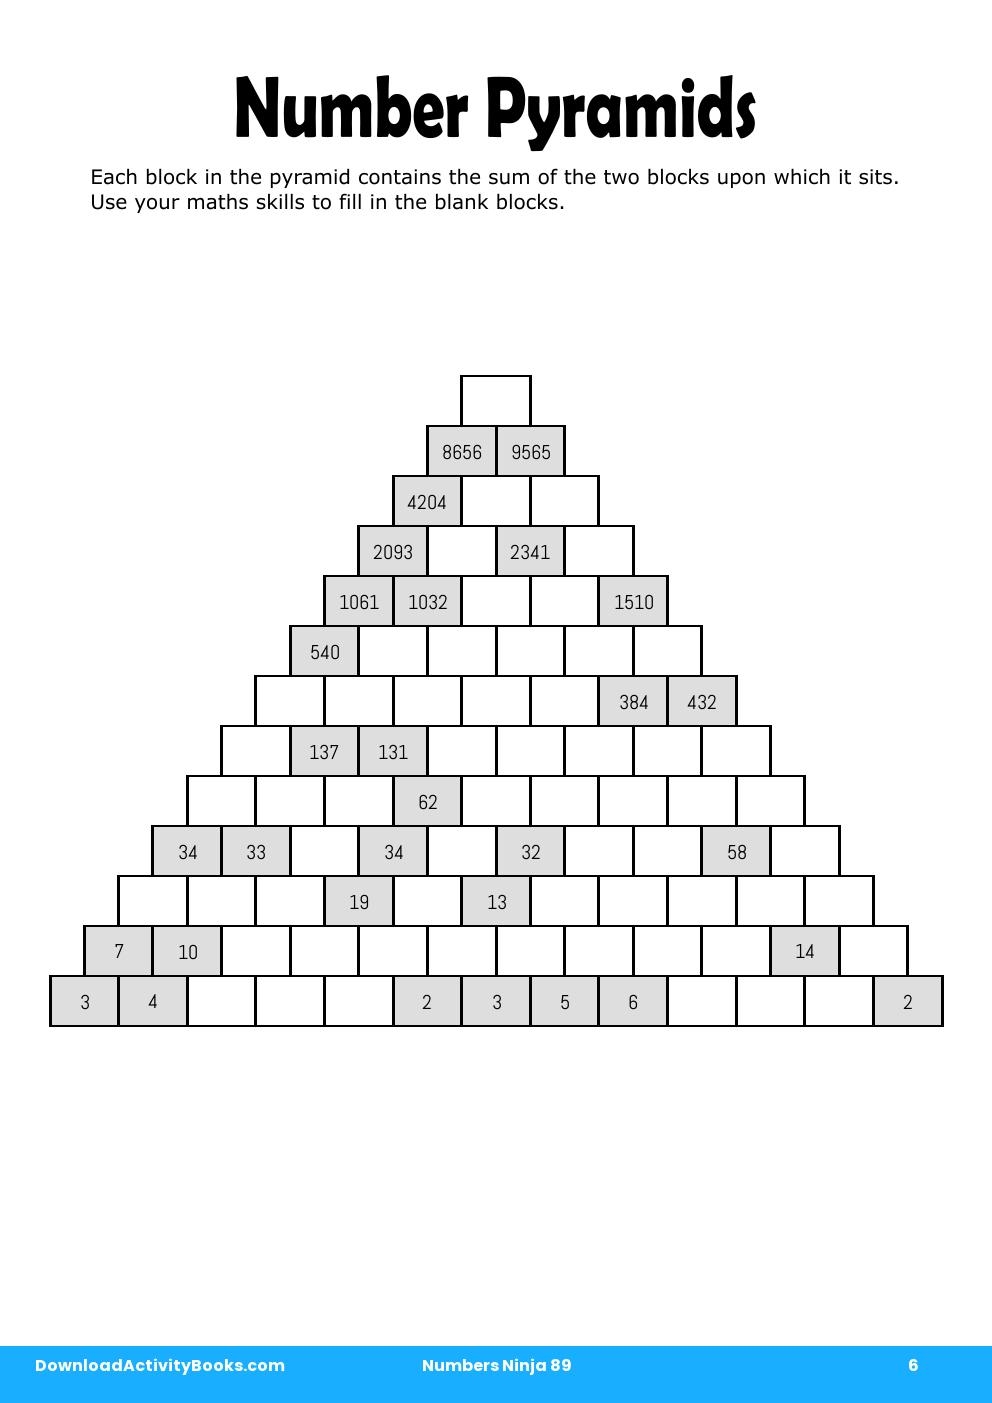 Number Pyramids in Numbers Ninja 89